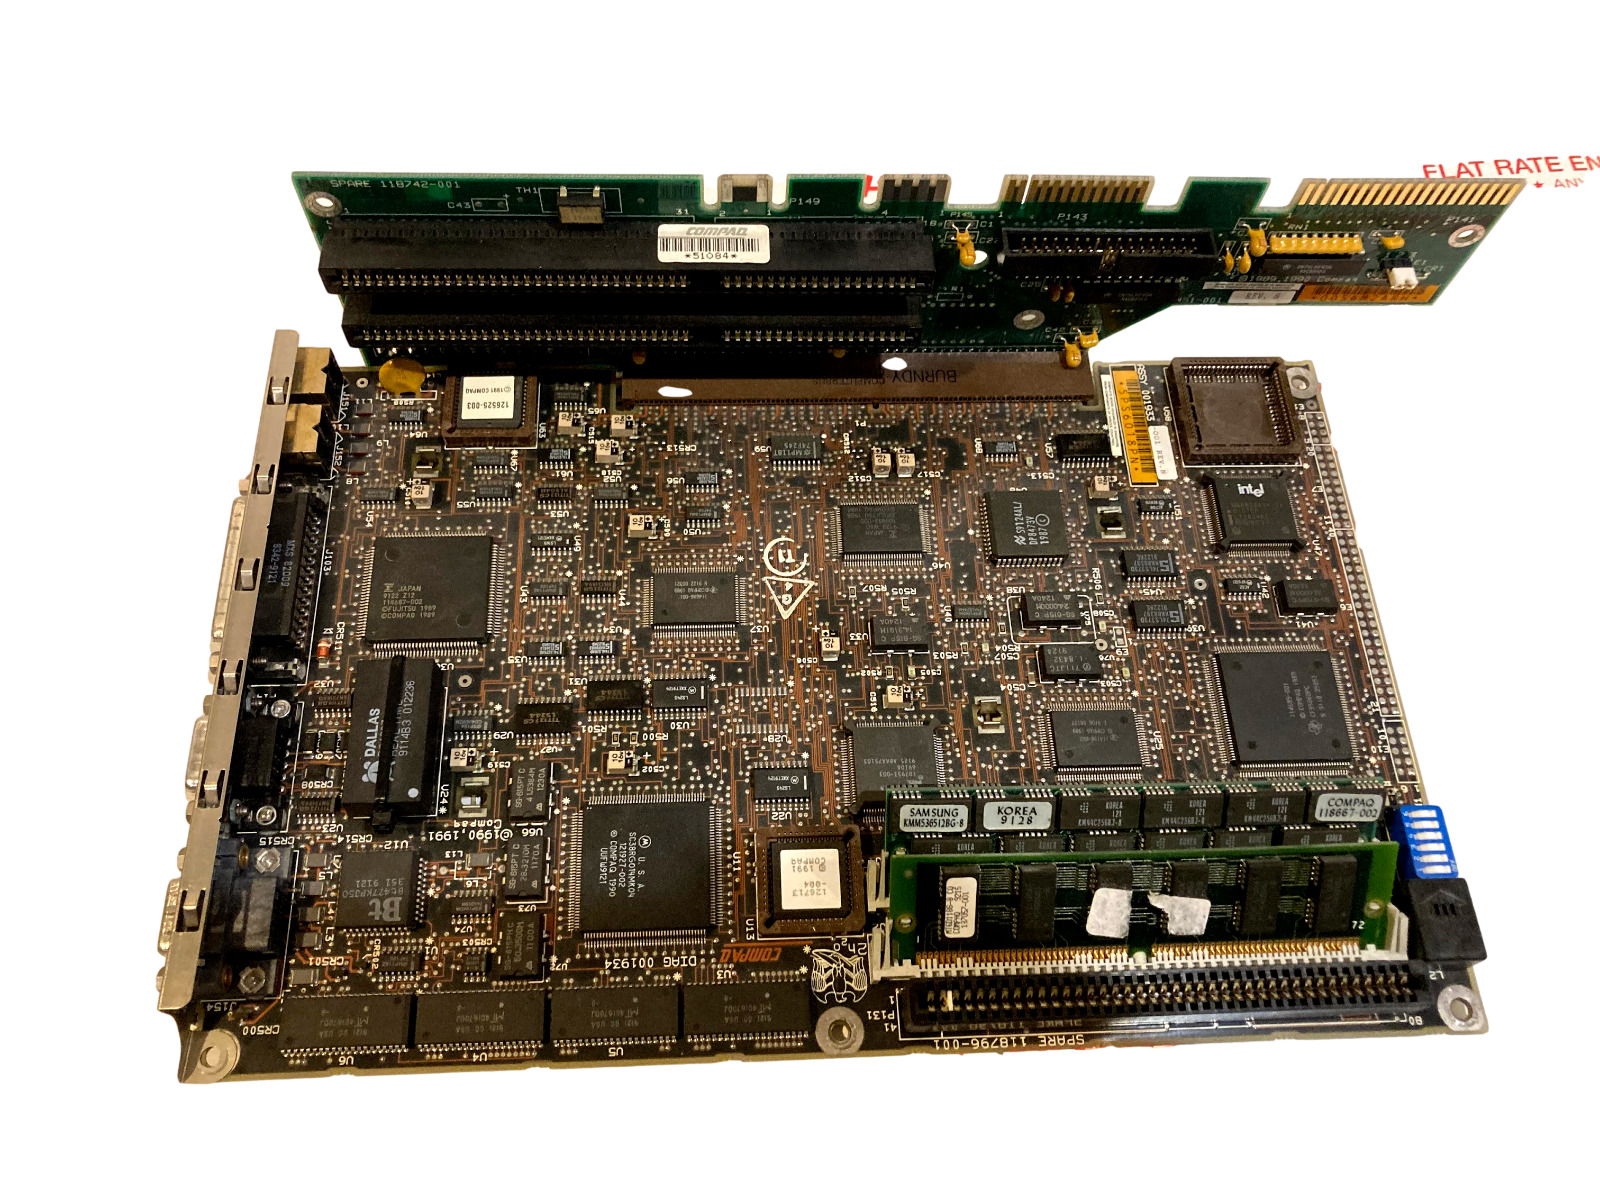 Compaq Deskpro 386n Motherboard + Intel 386SX 16MHz + 6MB RAM + Backplane Tested